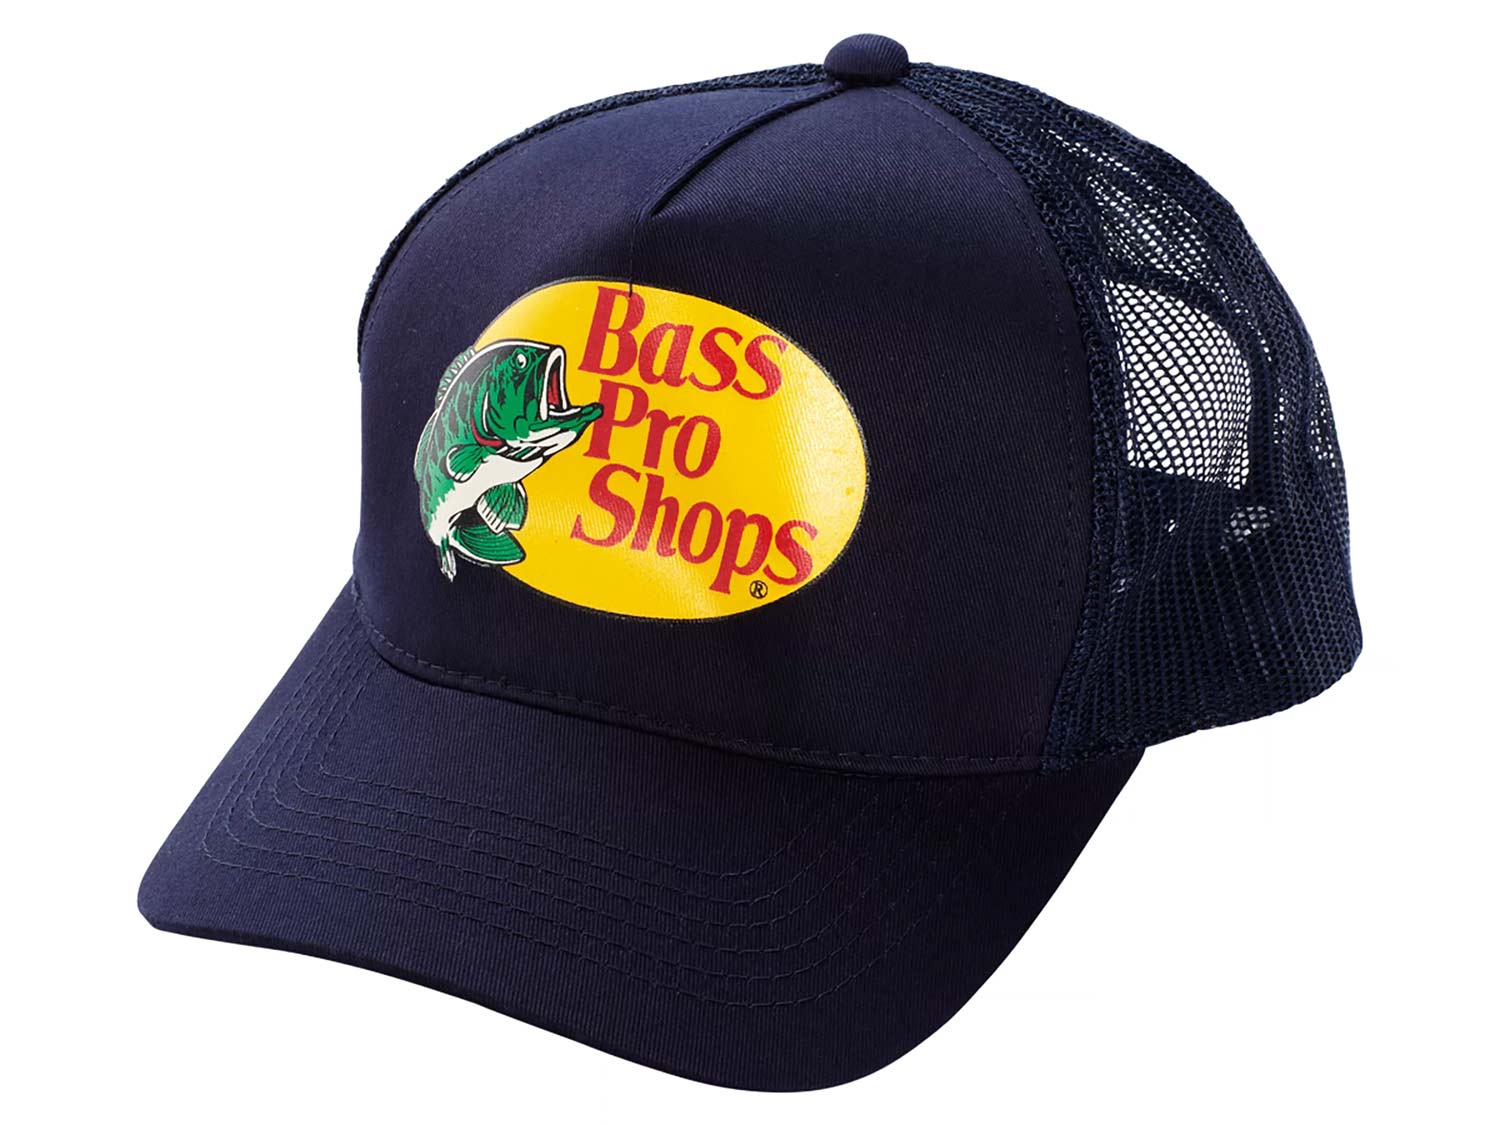 Bass Pro Shops Mesh Cap